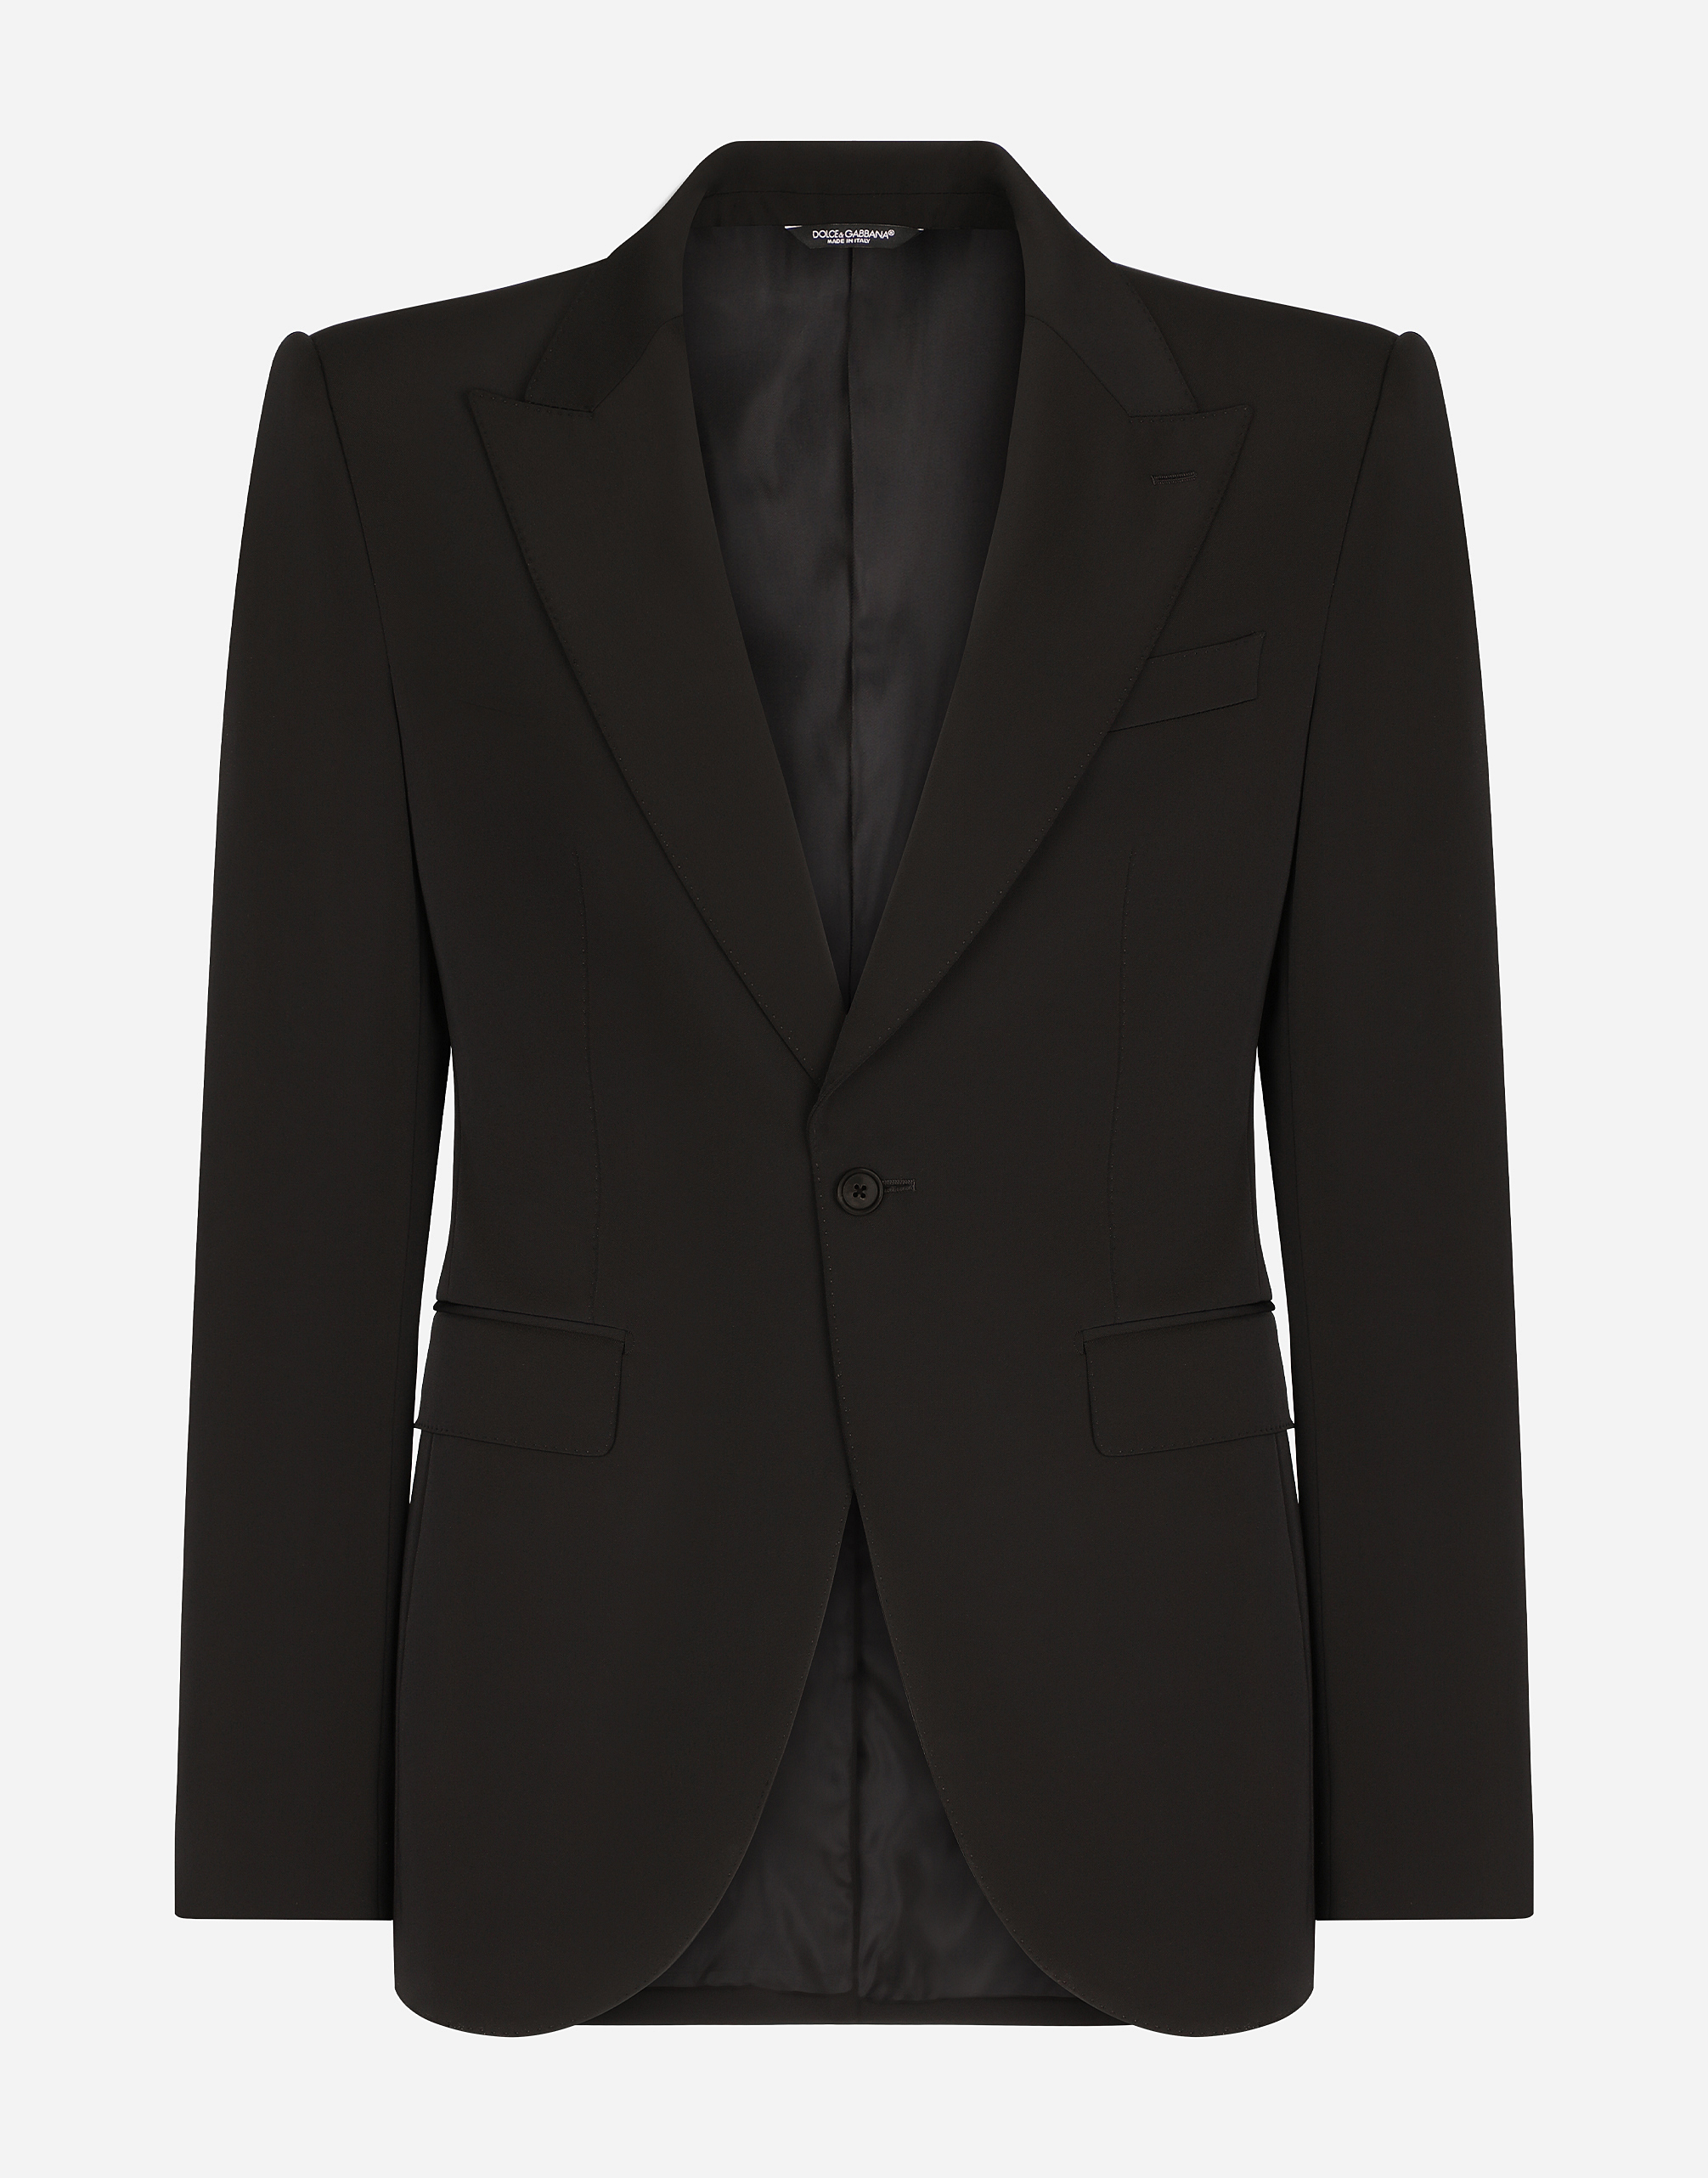 Stretch technical fabric Sicilia-fit jacket in Black